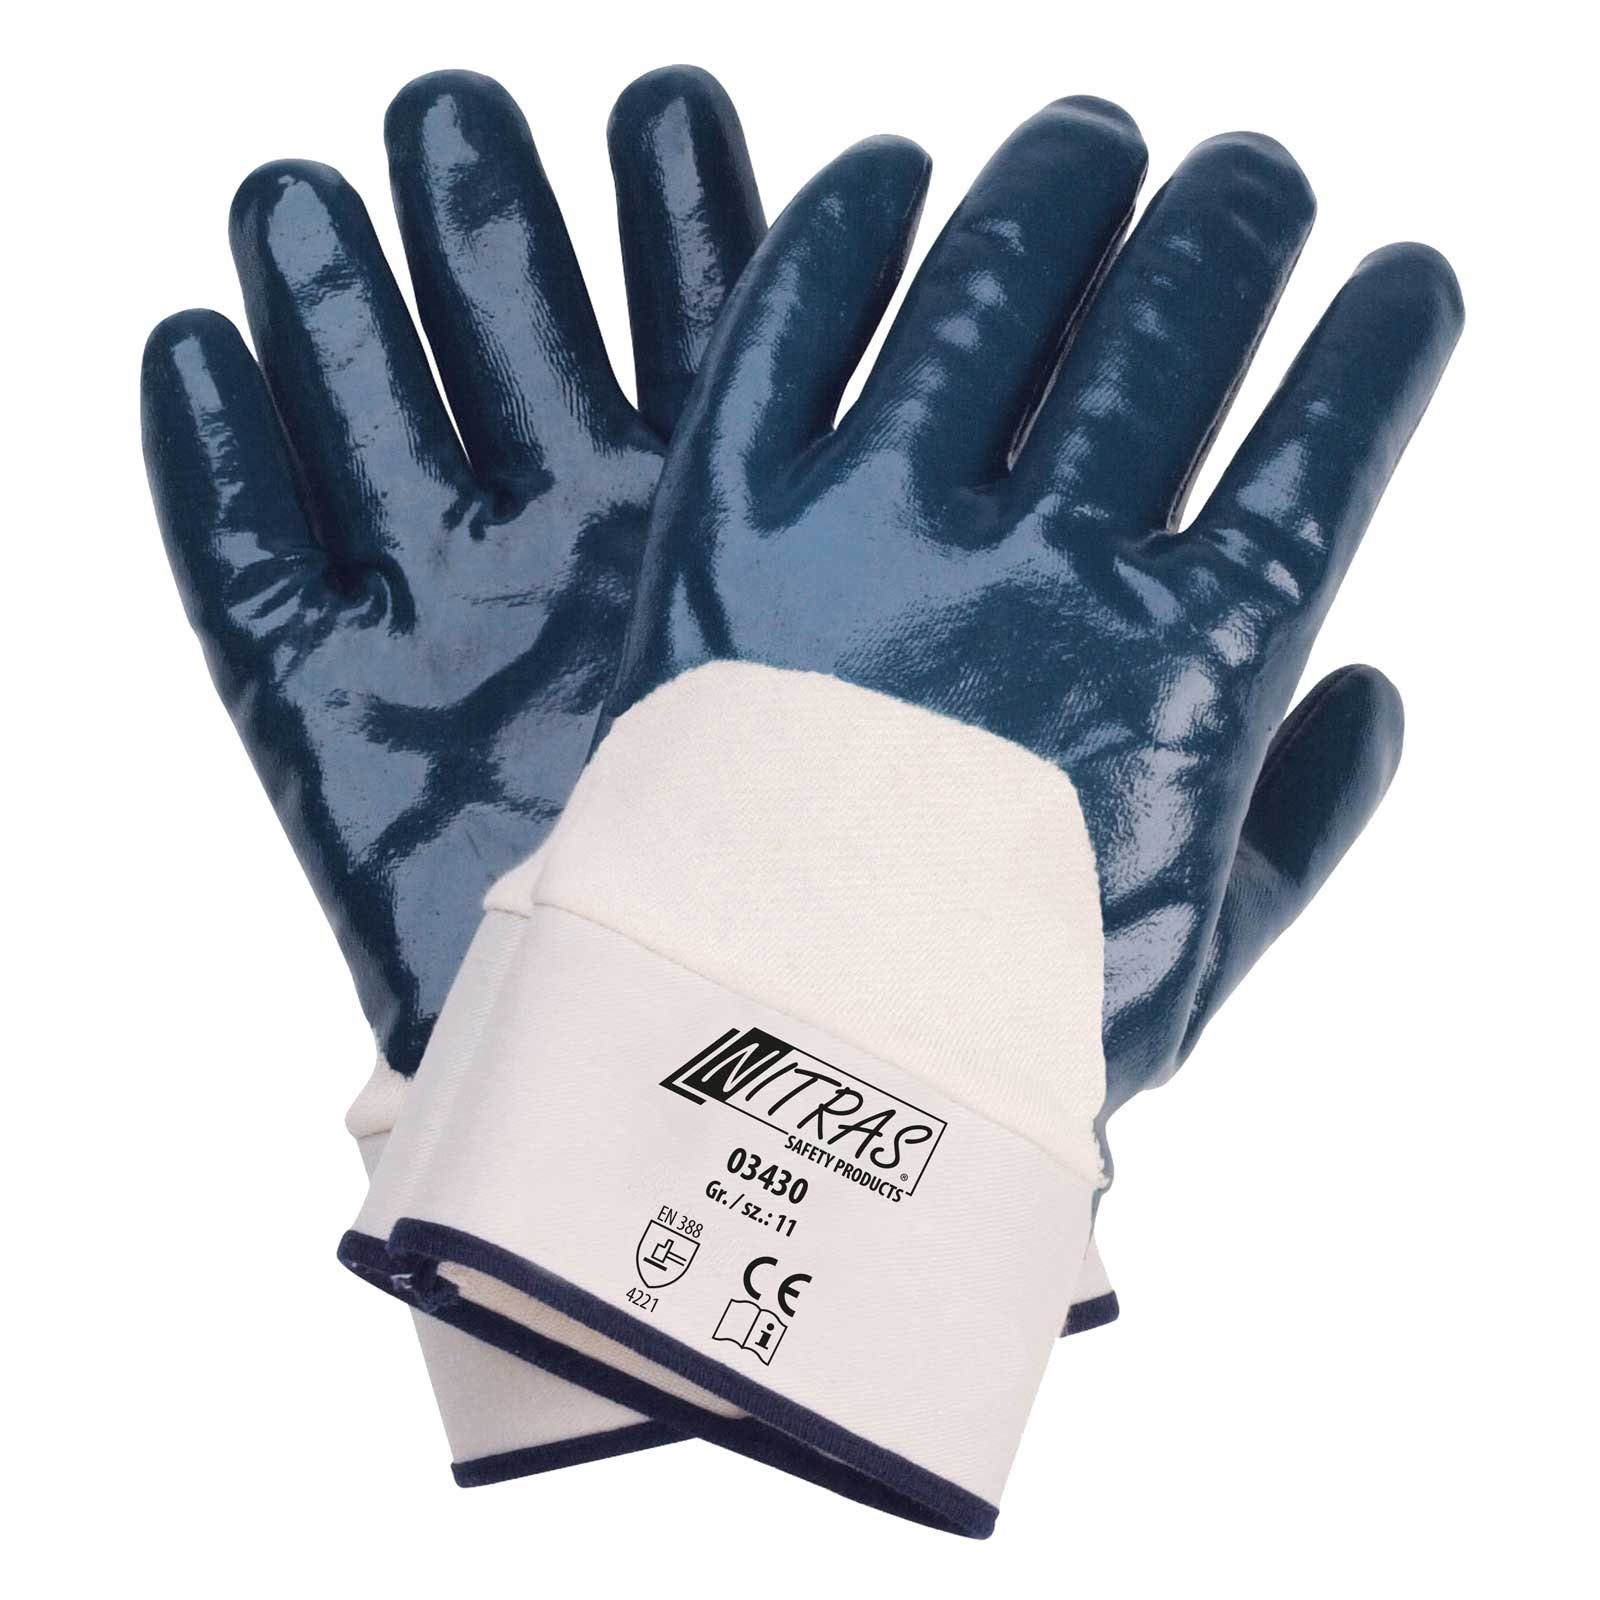 Nitras Nitril-Handschuhe NITRAS 03430, Paar - VPE 144 Beschichtung (Spar-Set) Nitrilhandschuhe Handschuhe